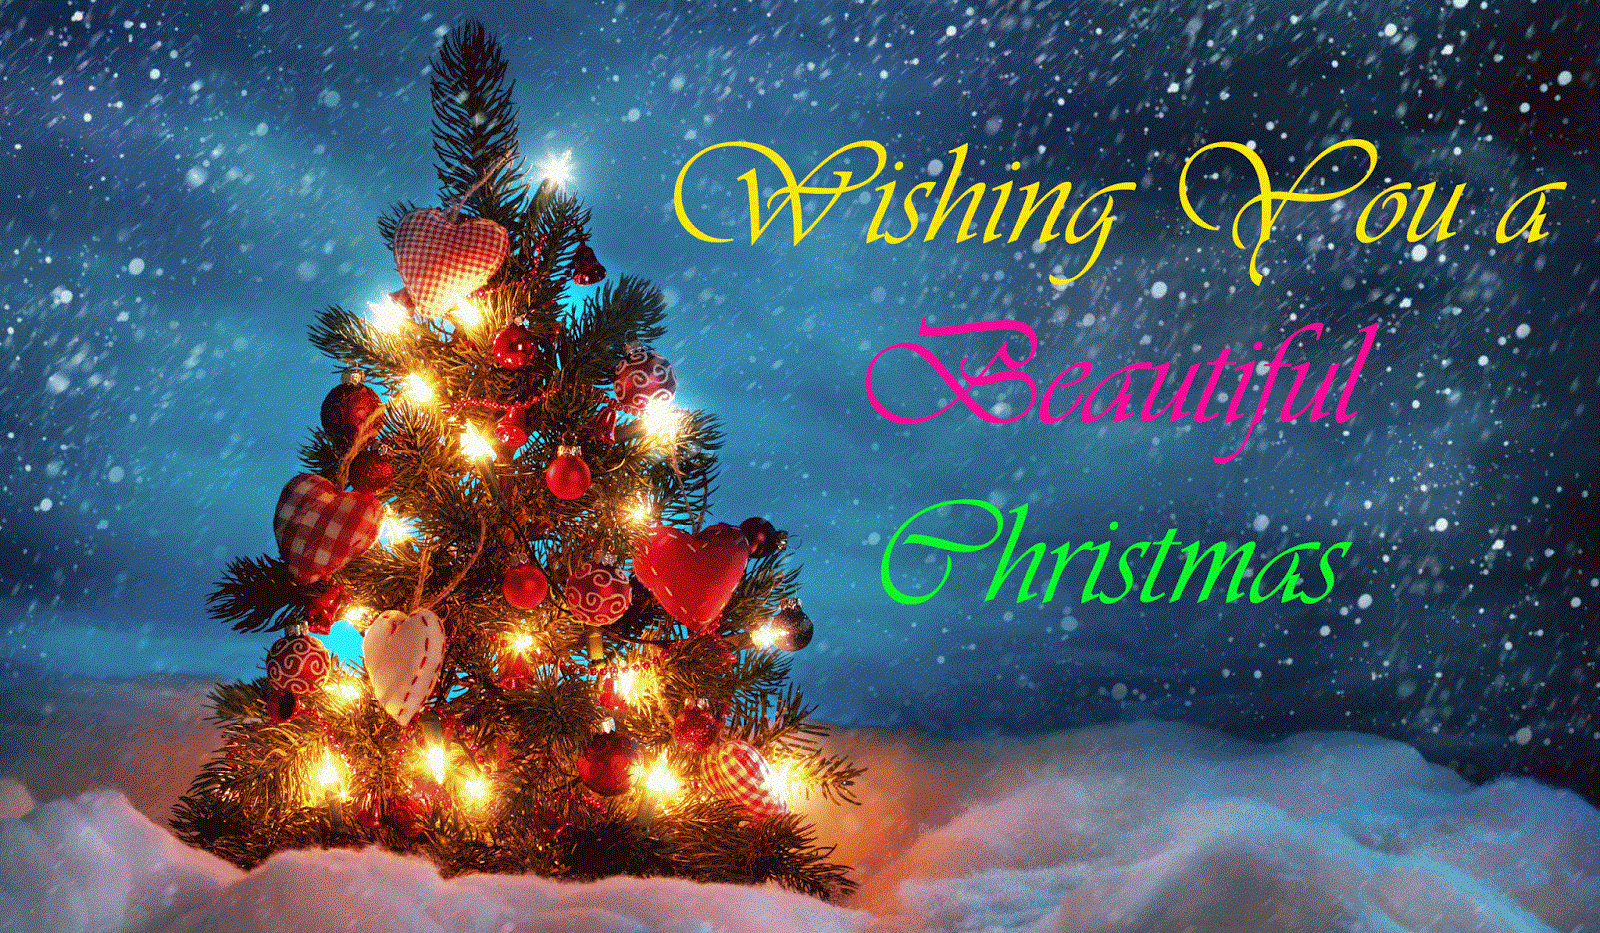 Merry Christmas 2016 Image HD 3D Wallpaper Greetings